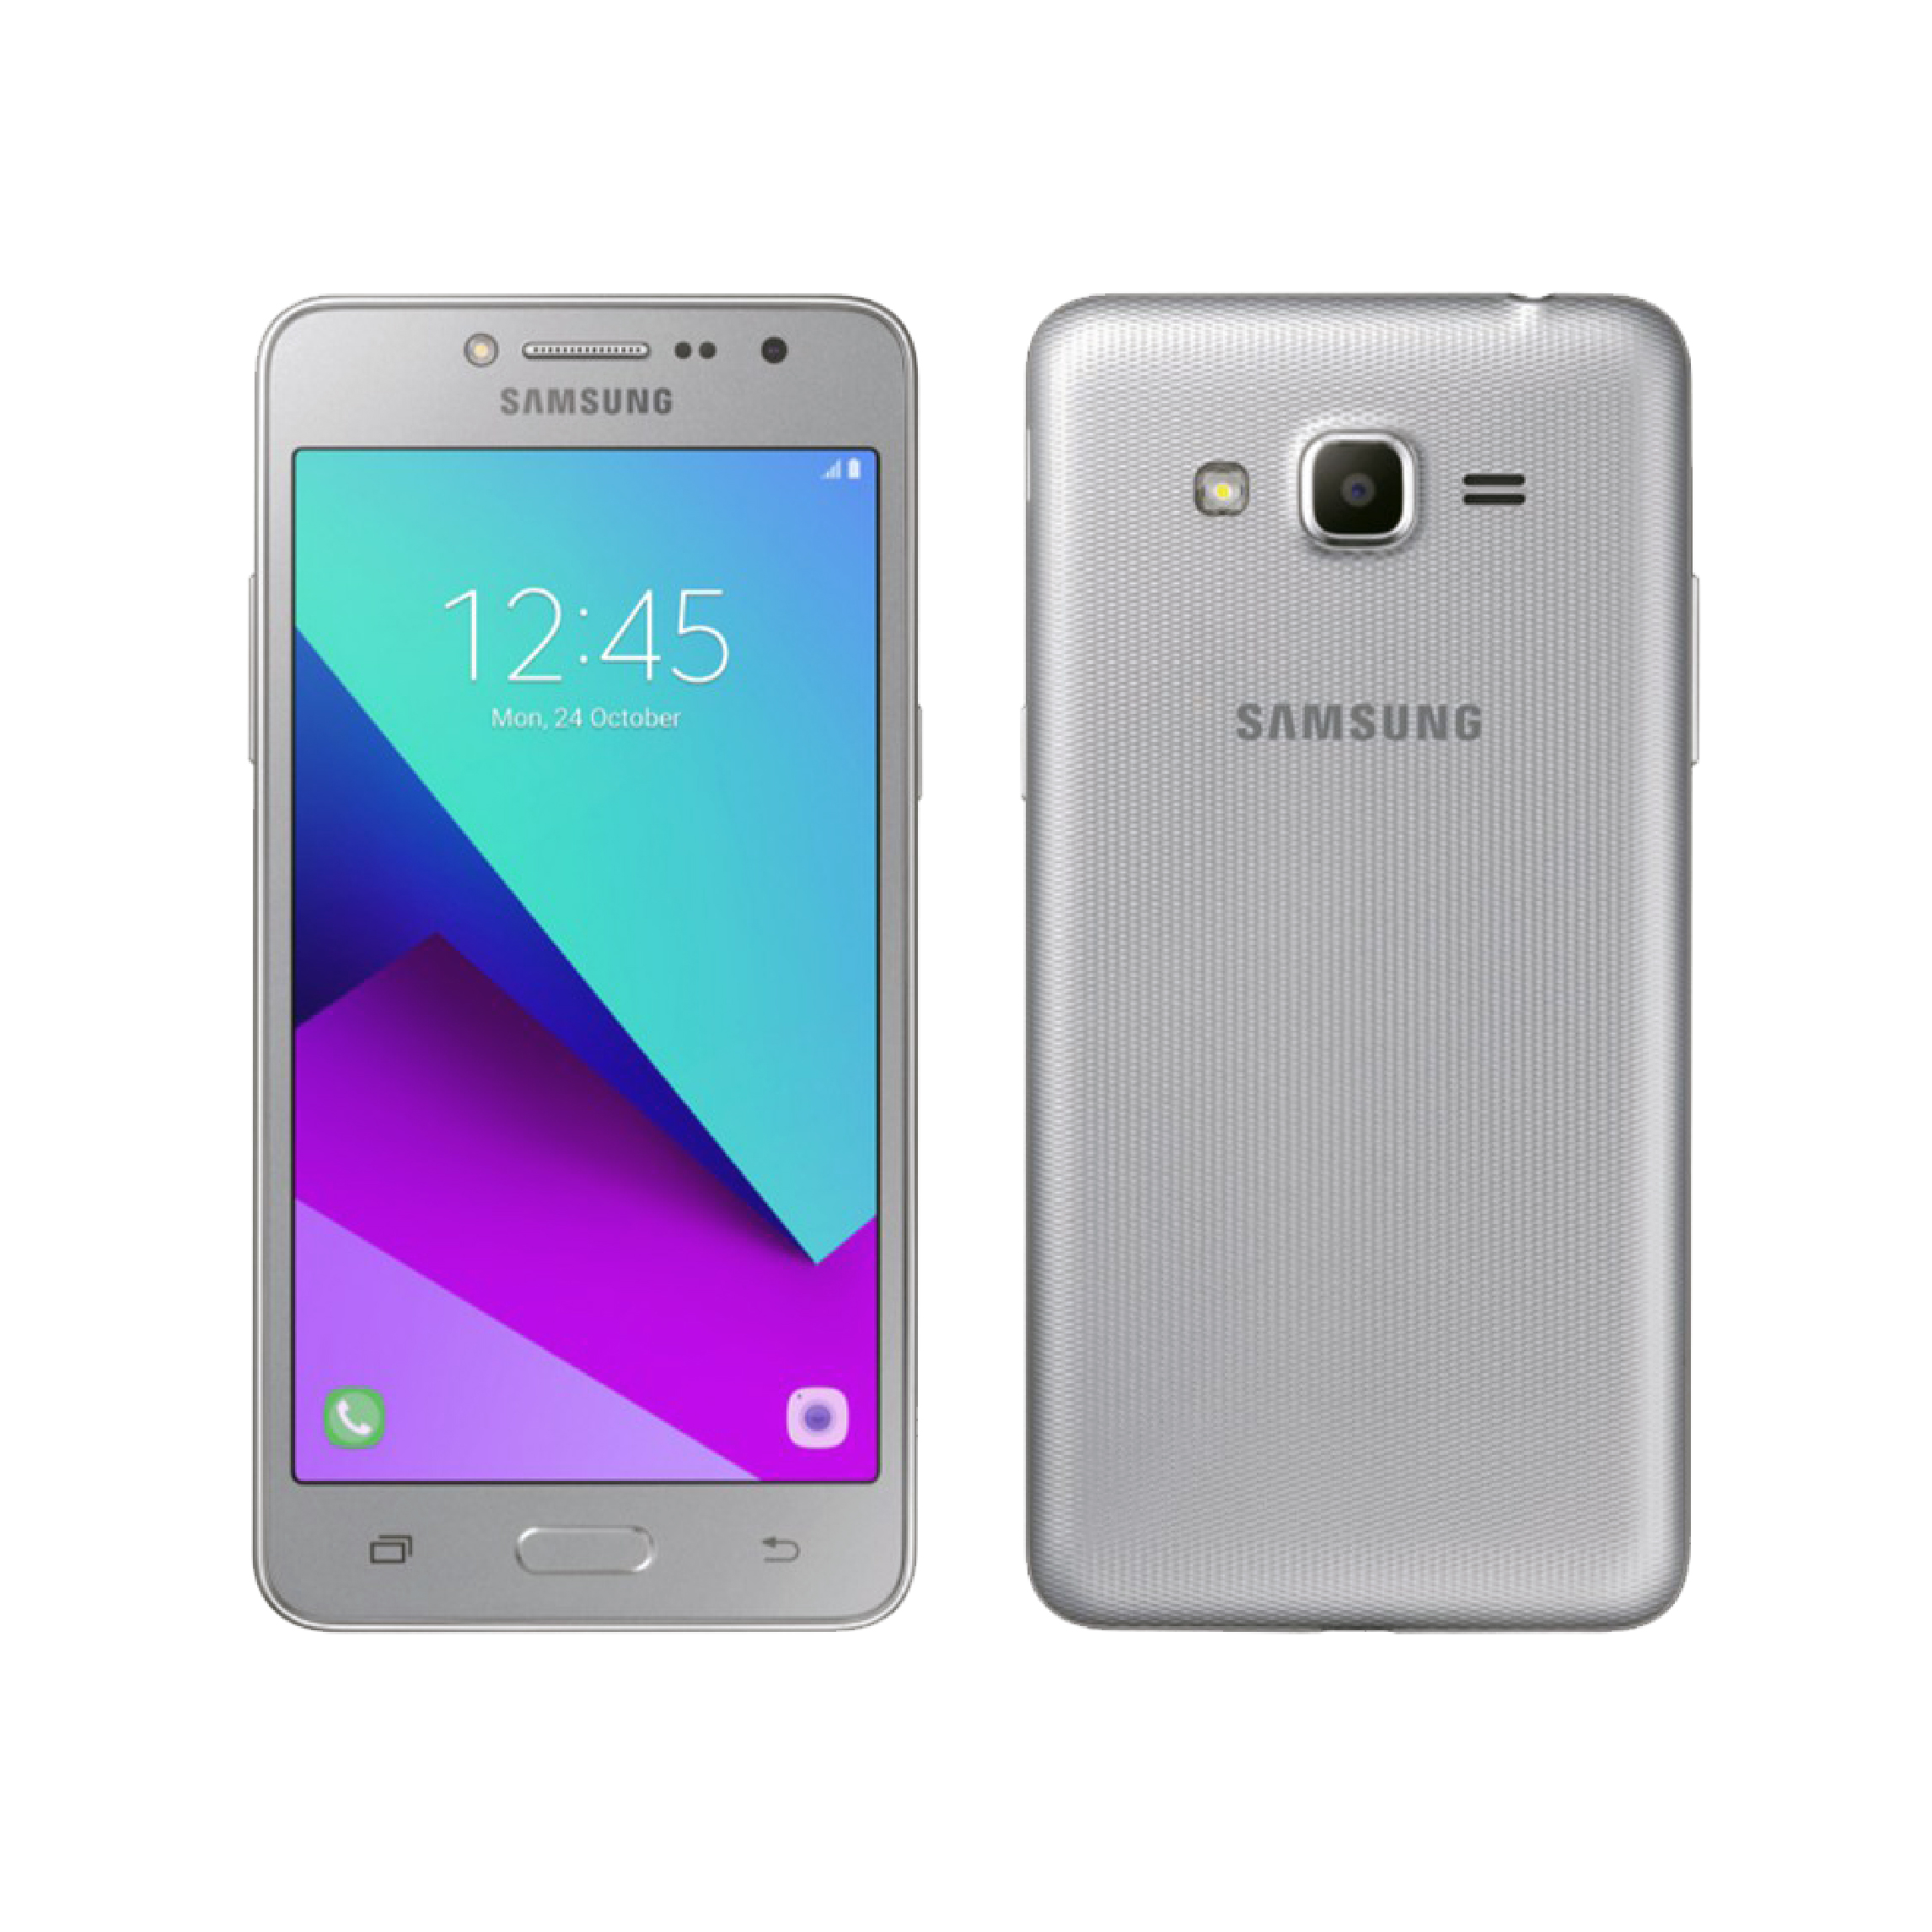 Samsung Galaxy J2 Prime 1.5GB/8GB Silver Harga dan Spesifikasi